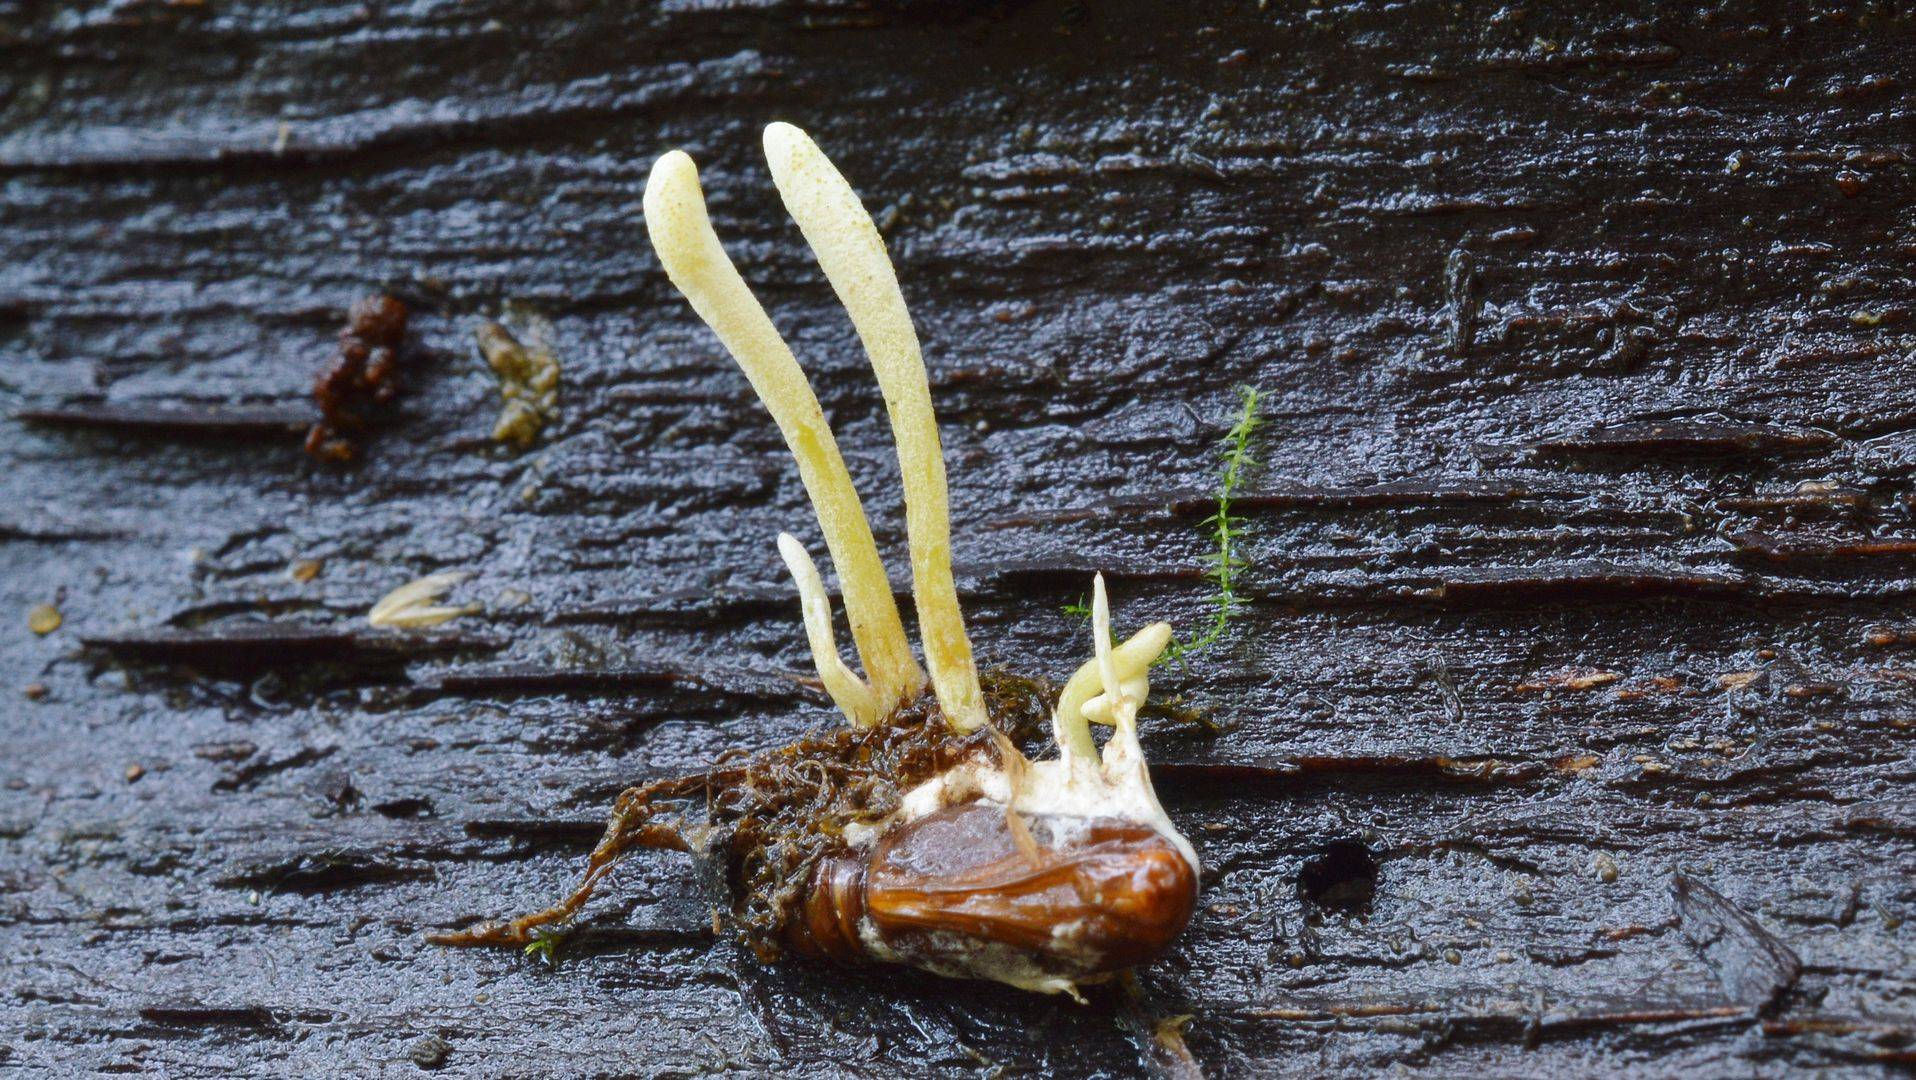 Кордицепс однобокий – гриб, зомбирующий муравьев — викигриб